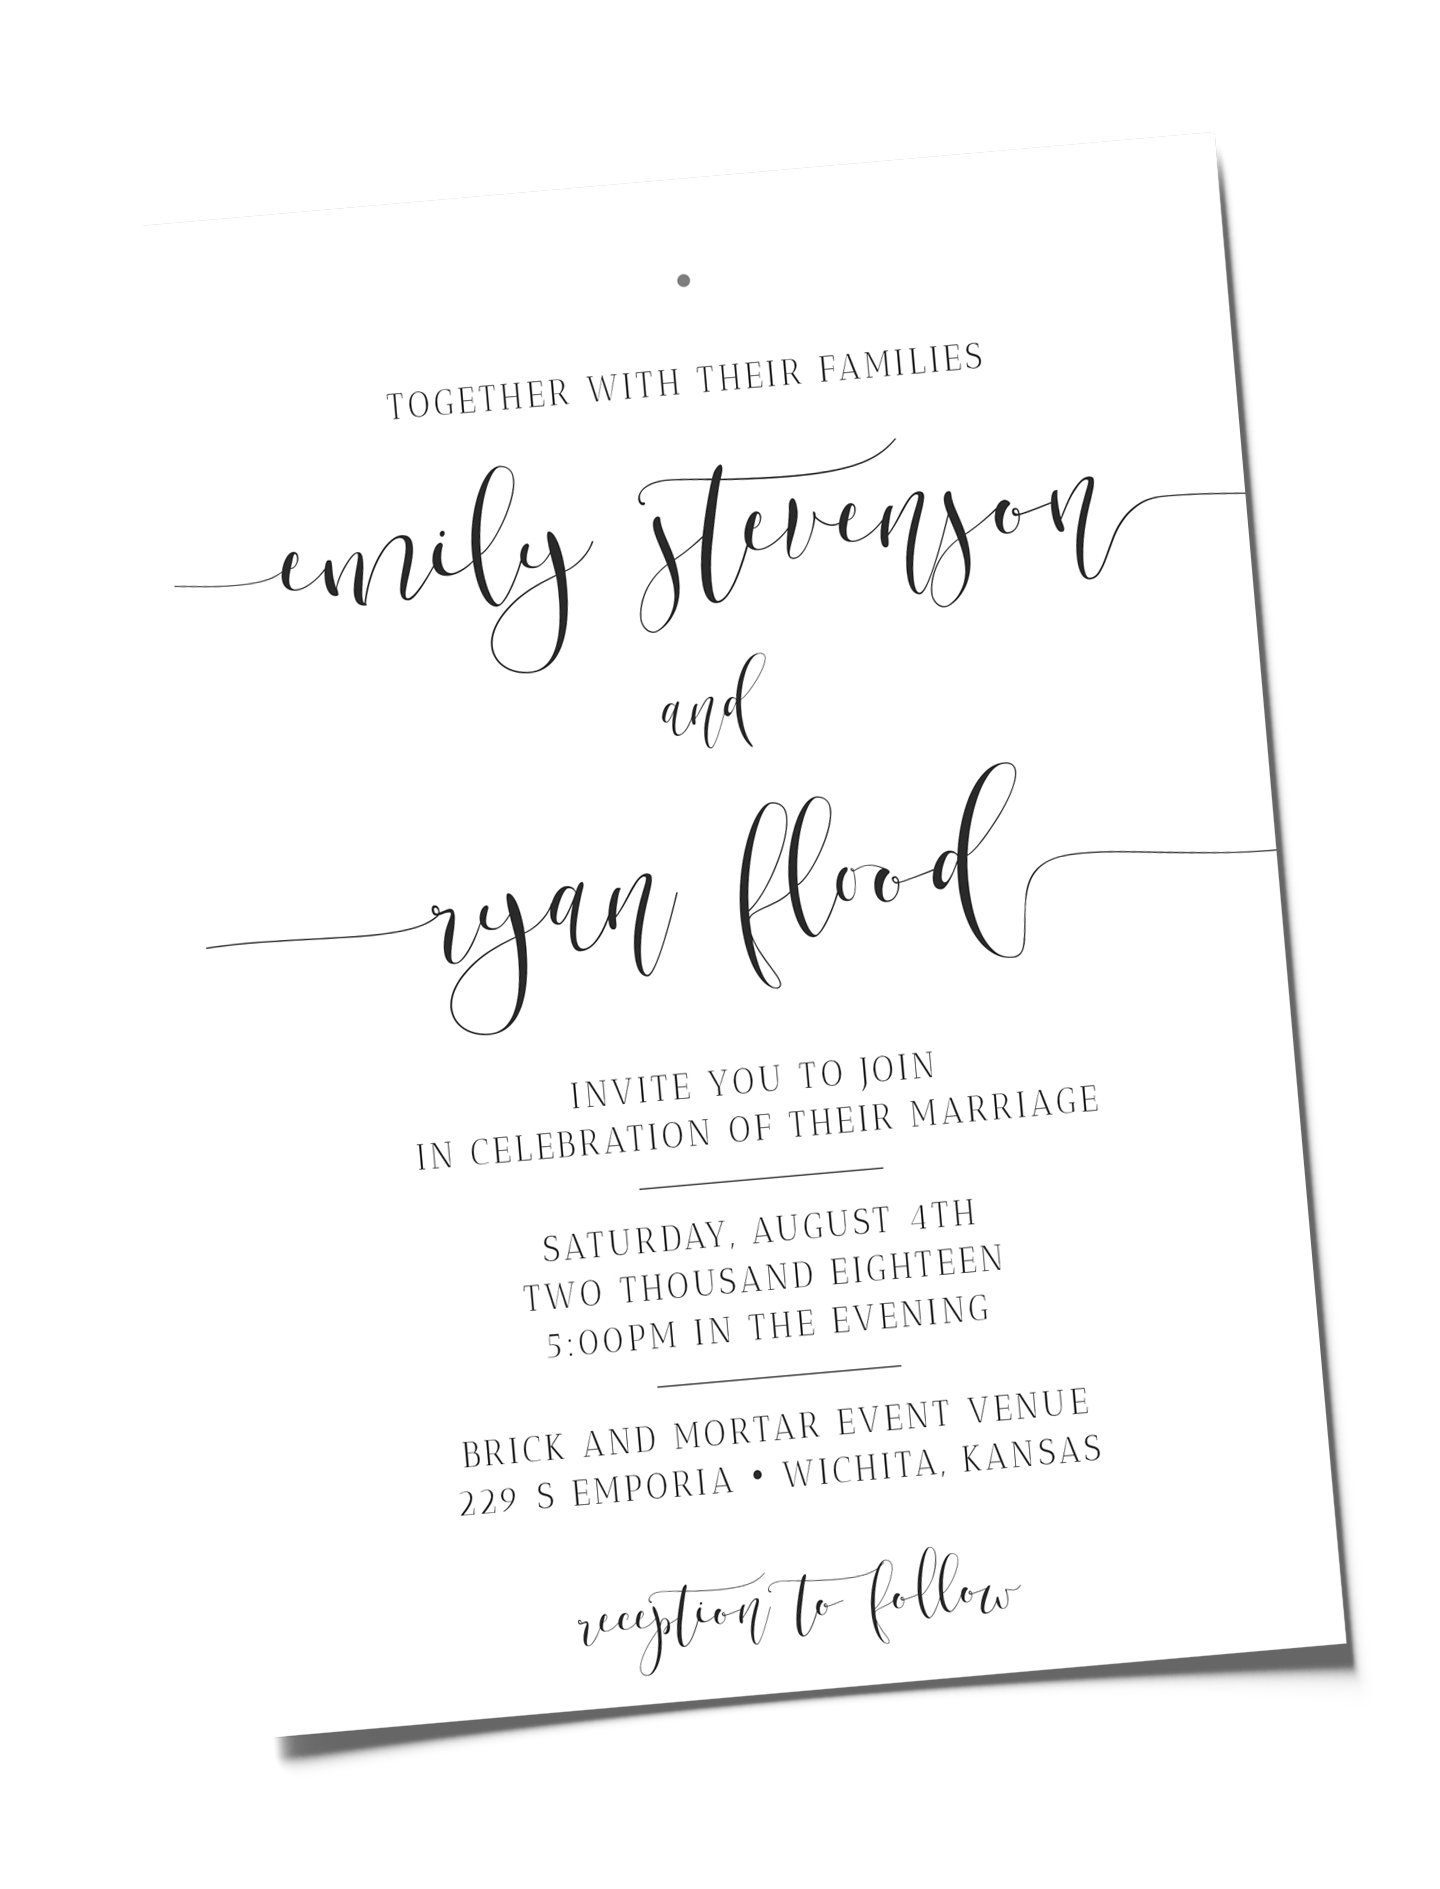 Wedding invite printed by Emporia State's University Copy Center